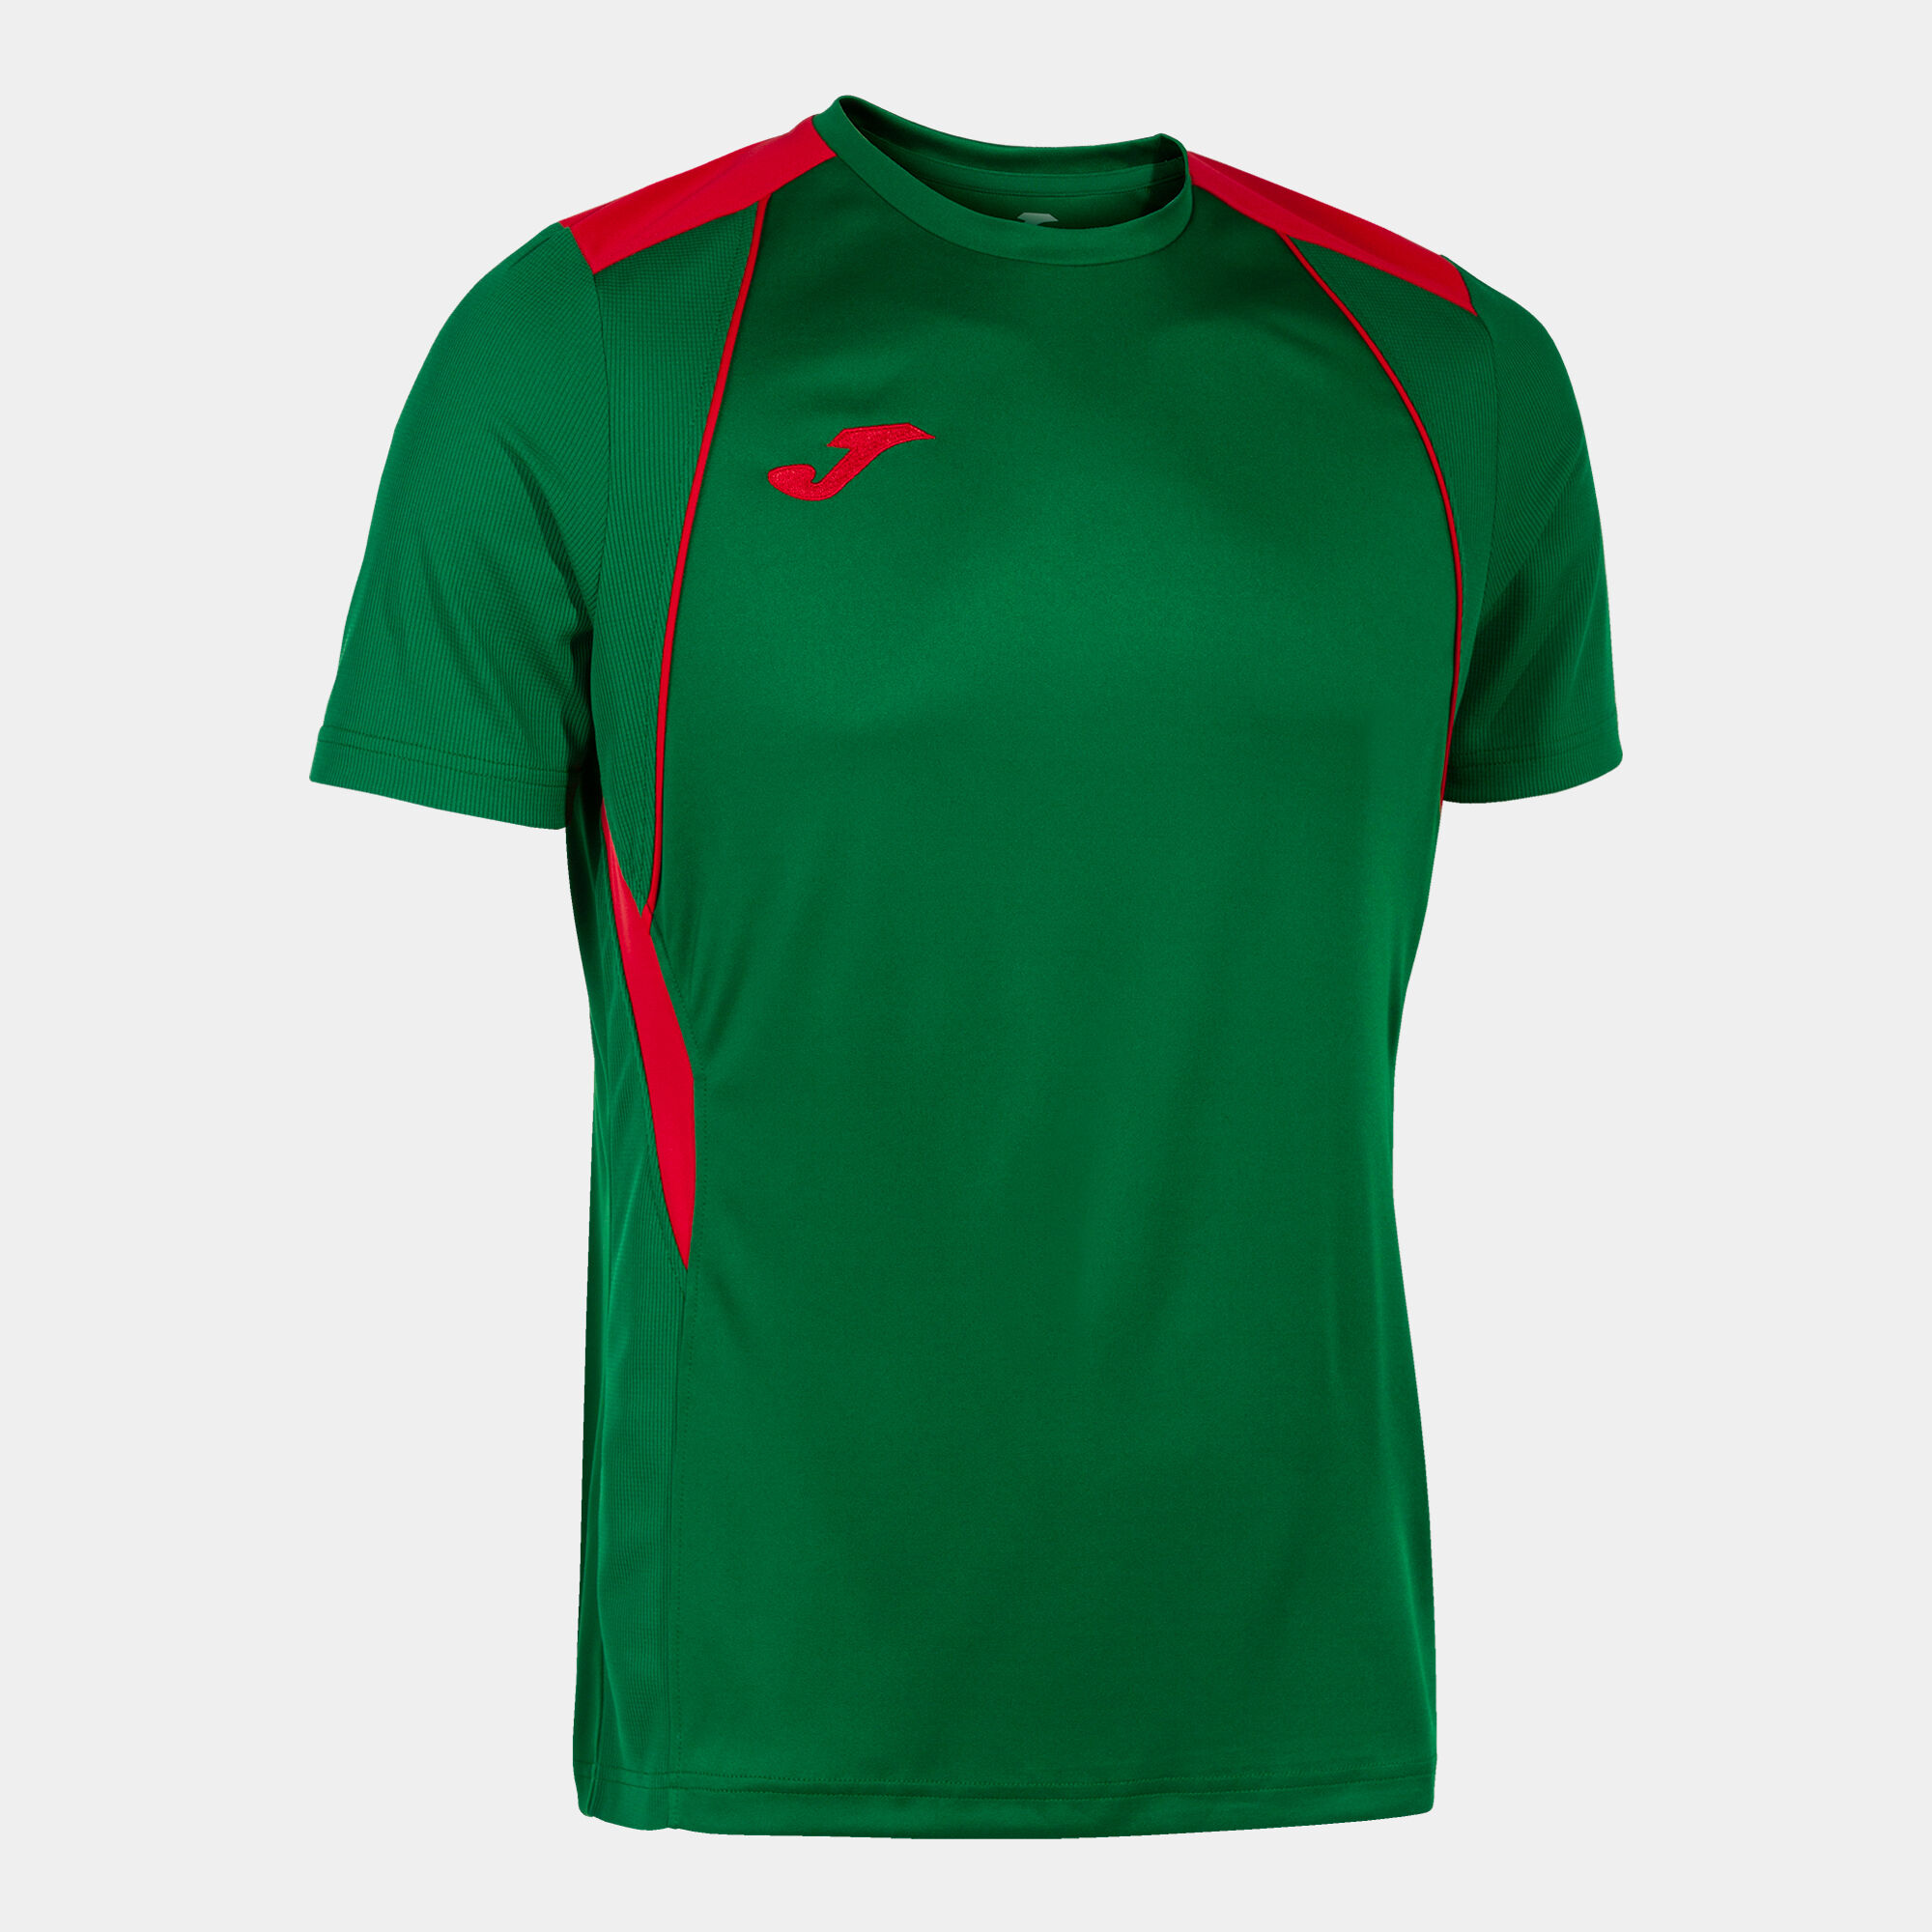 Nota Vandalir Selección conjunta Shirt short sleeve man Championship VII green red | JOMA®